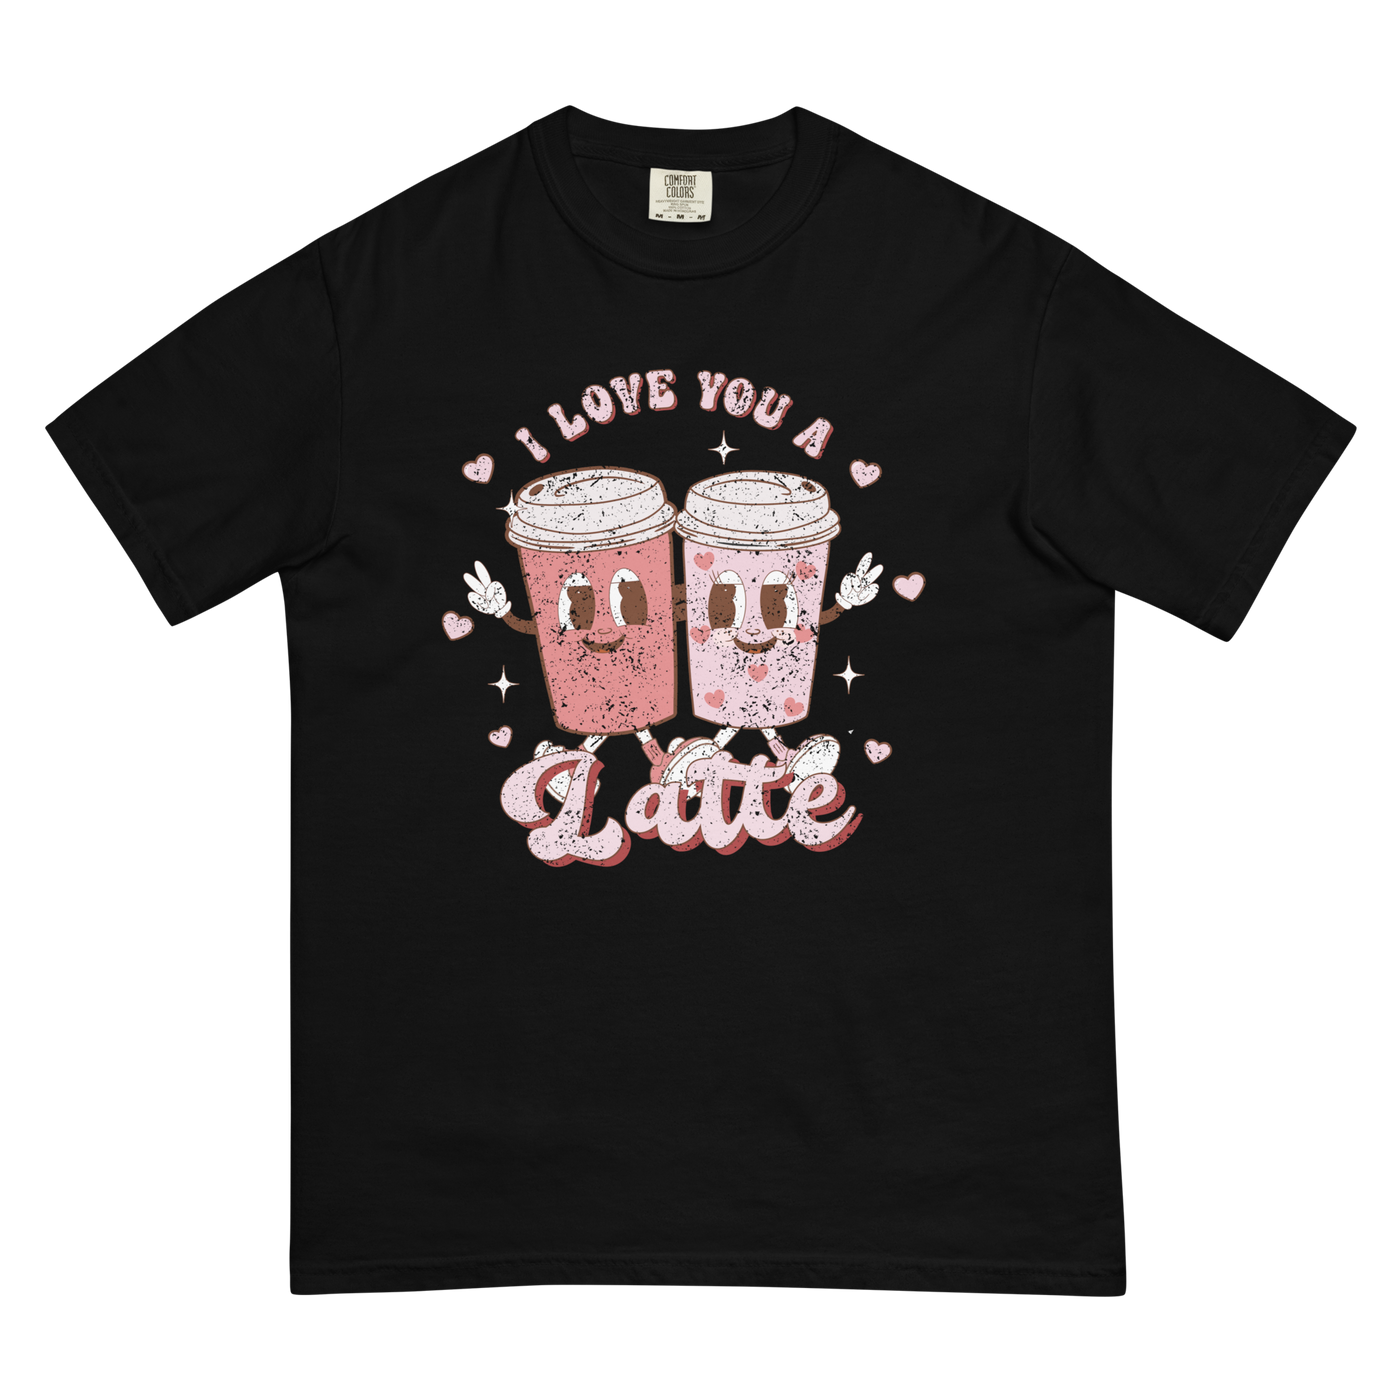 Monogrammed 'I Love You A Latte' T-Shirt